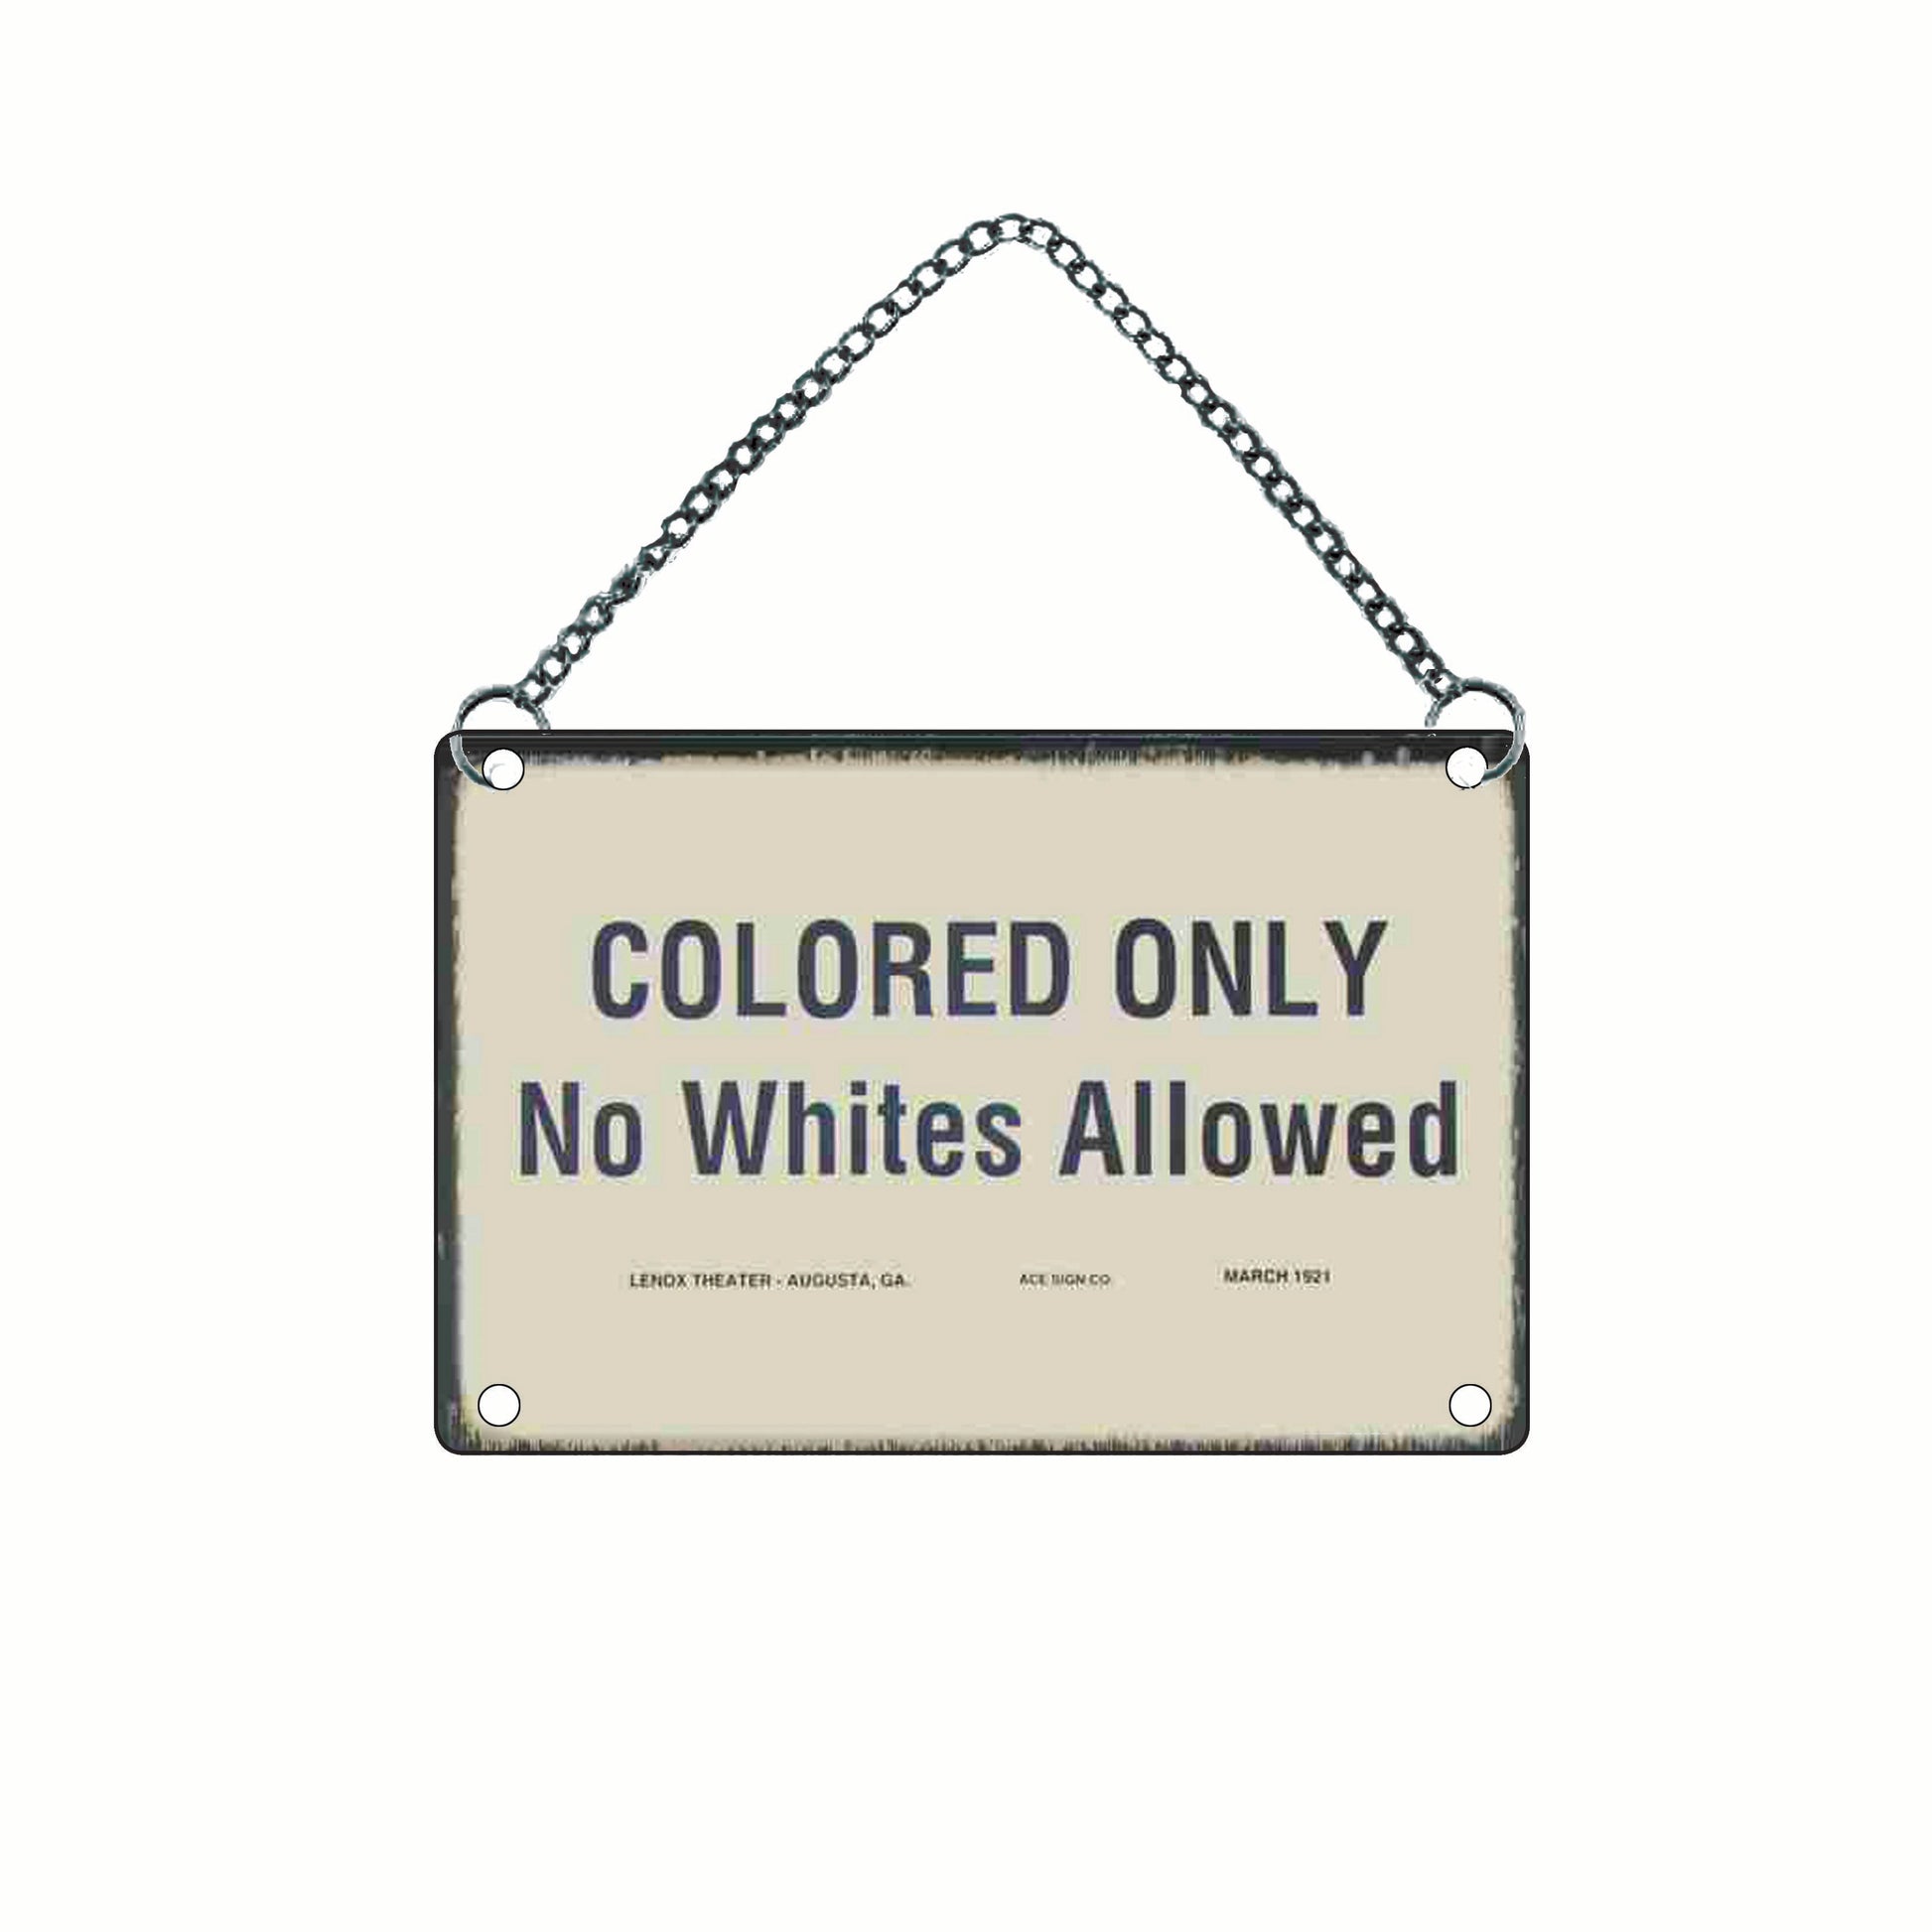 No Whites Allowed